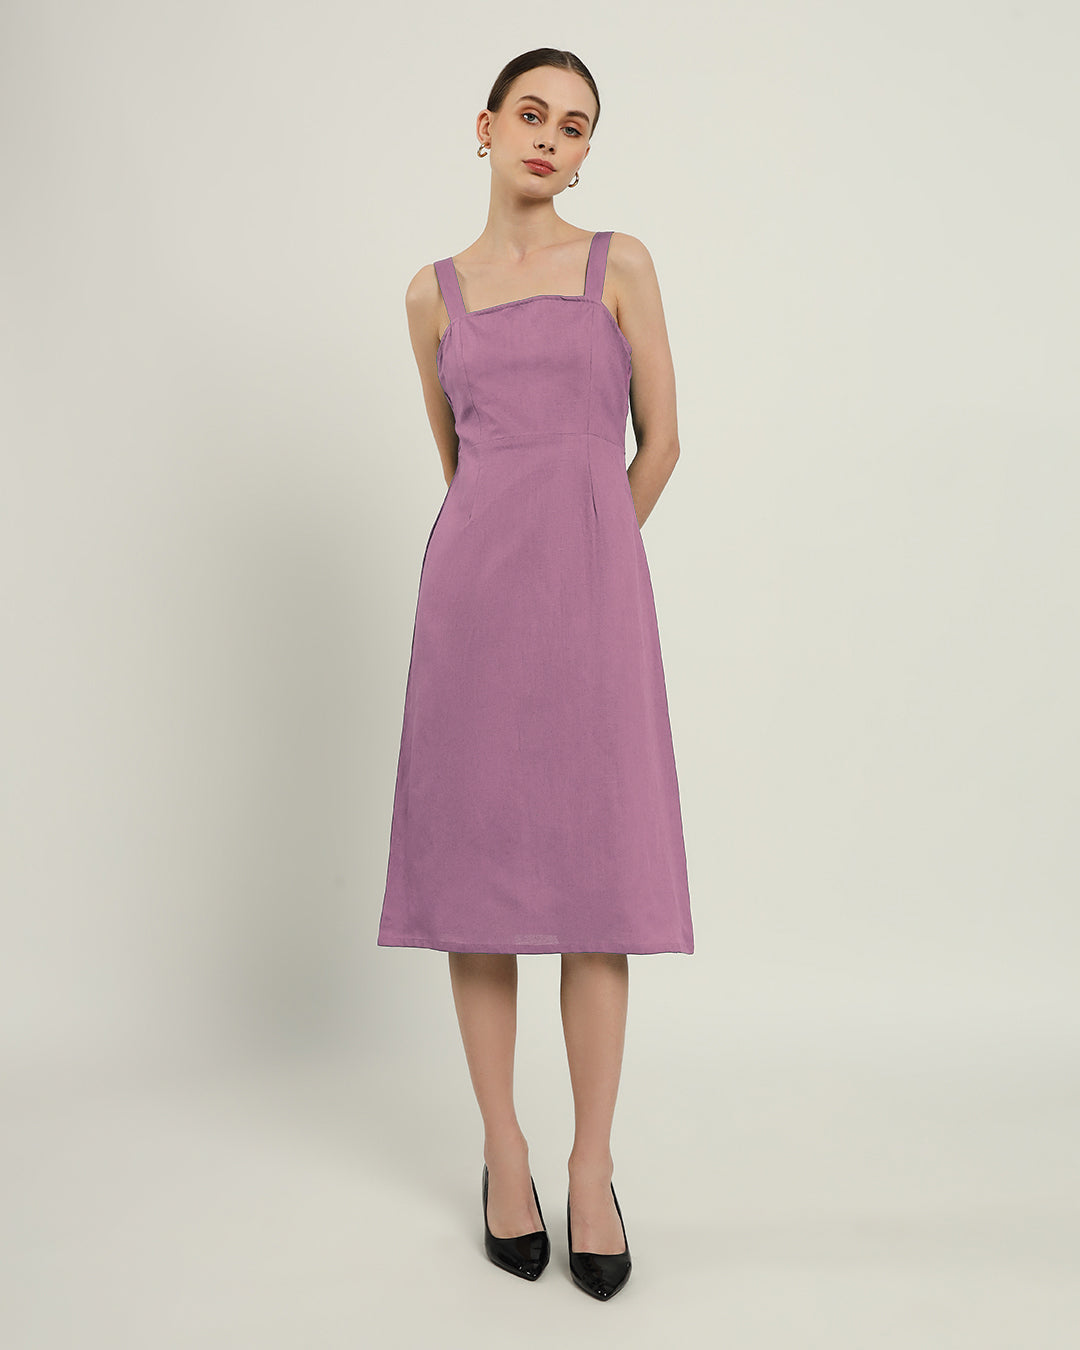 The Samara Purple Swirl Dress